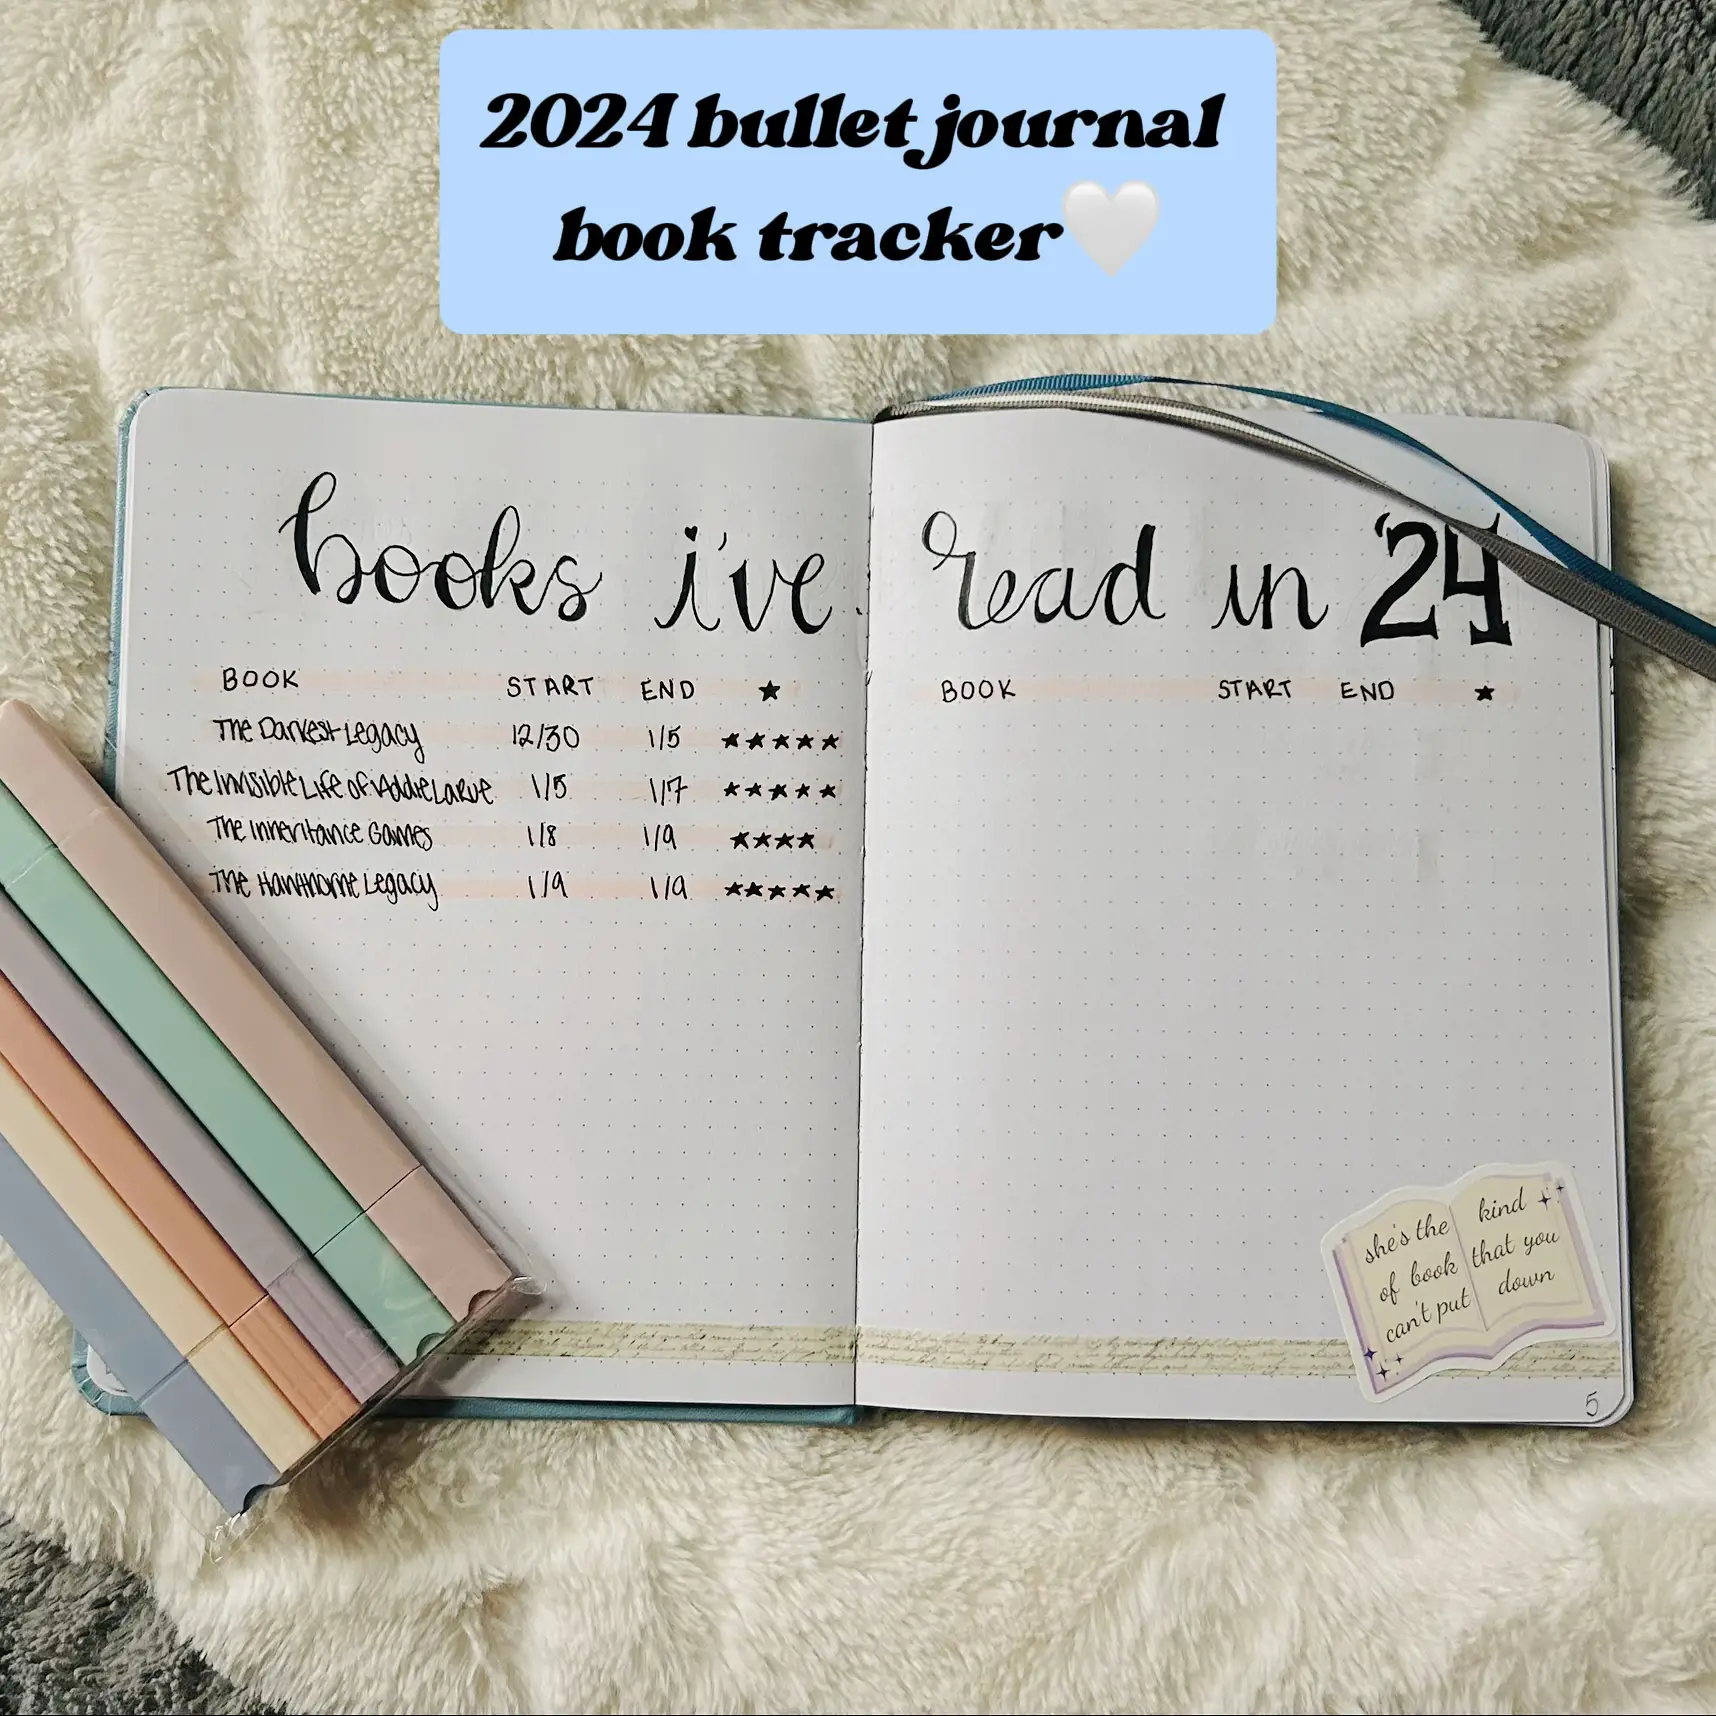 New Bullet Journal Setup 2024 - Natasha Miller Creat